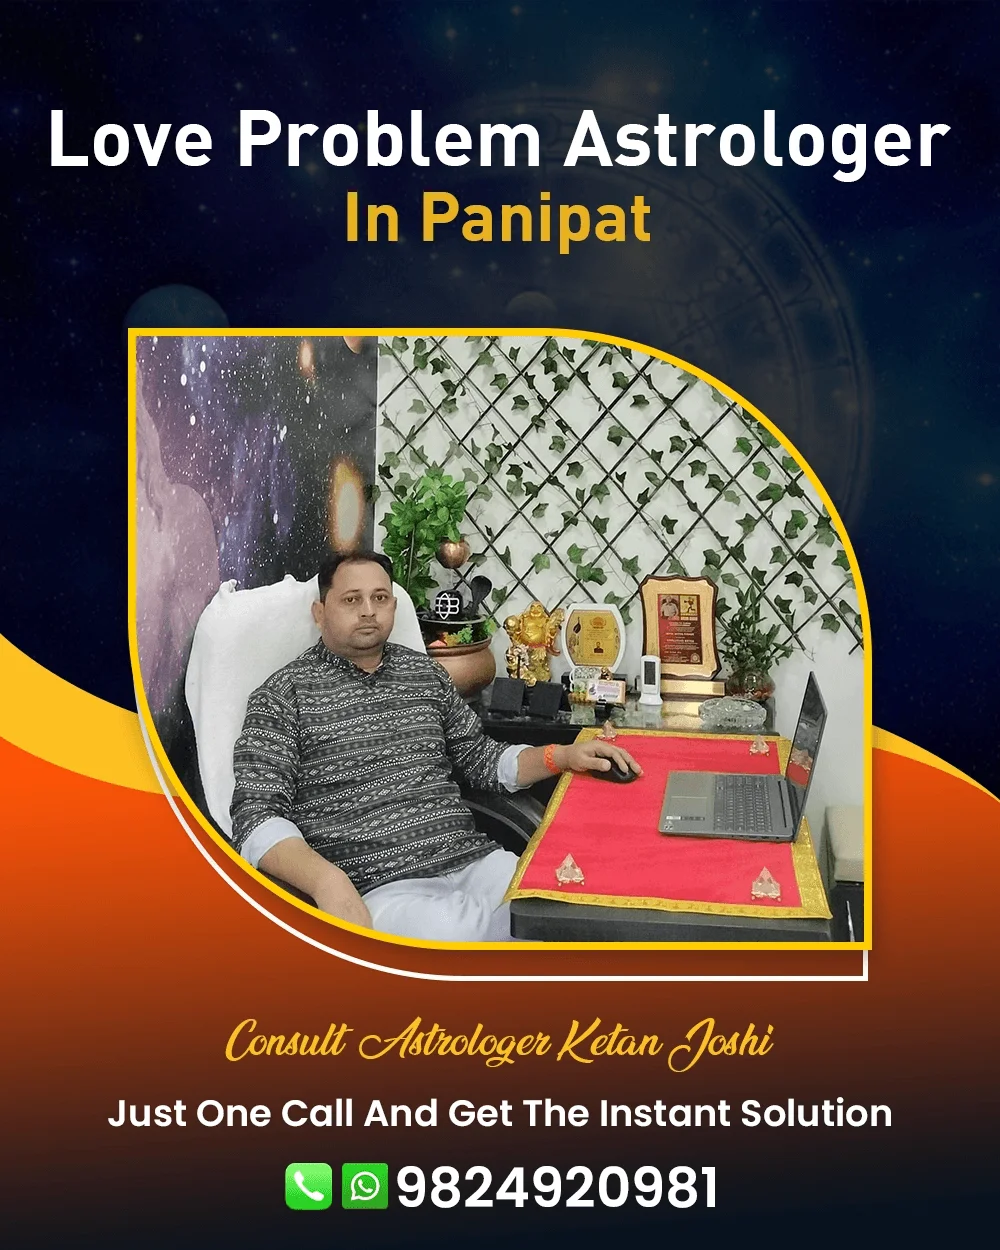 Love Problem Astrologer In Panipat